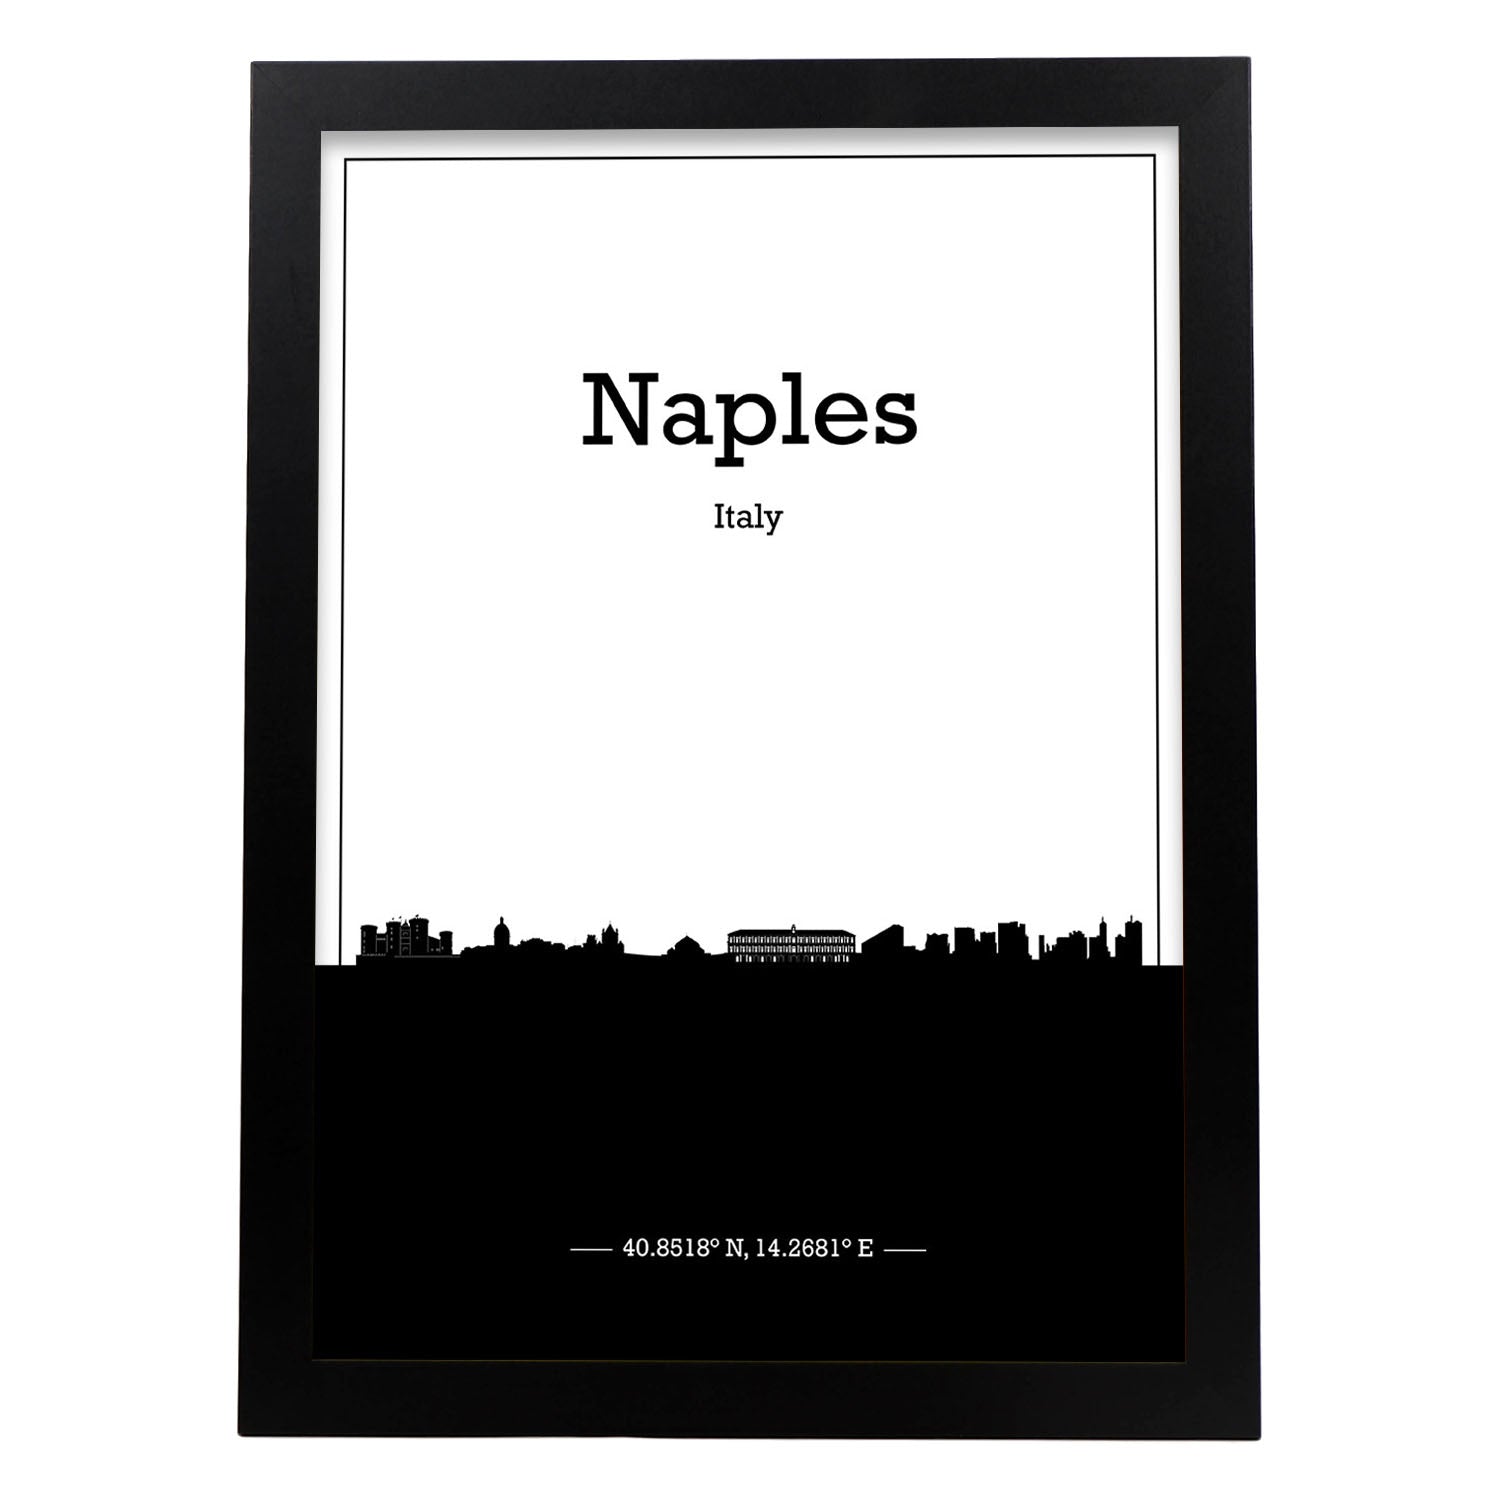 Poster con mapa de Naples - Italia. Láminas con Skyline de ciudades de Italia con sombra negra.-Artwork-Nacnic-A3-Marco Negro-Nacnic Estudio SL